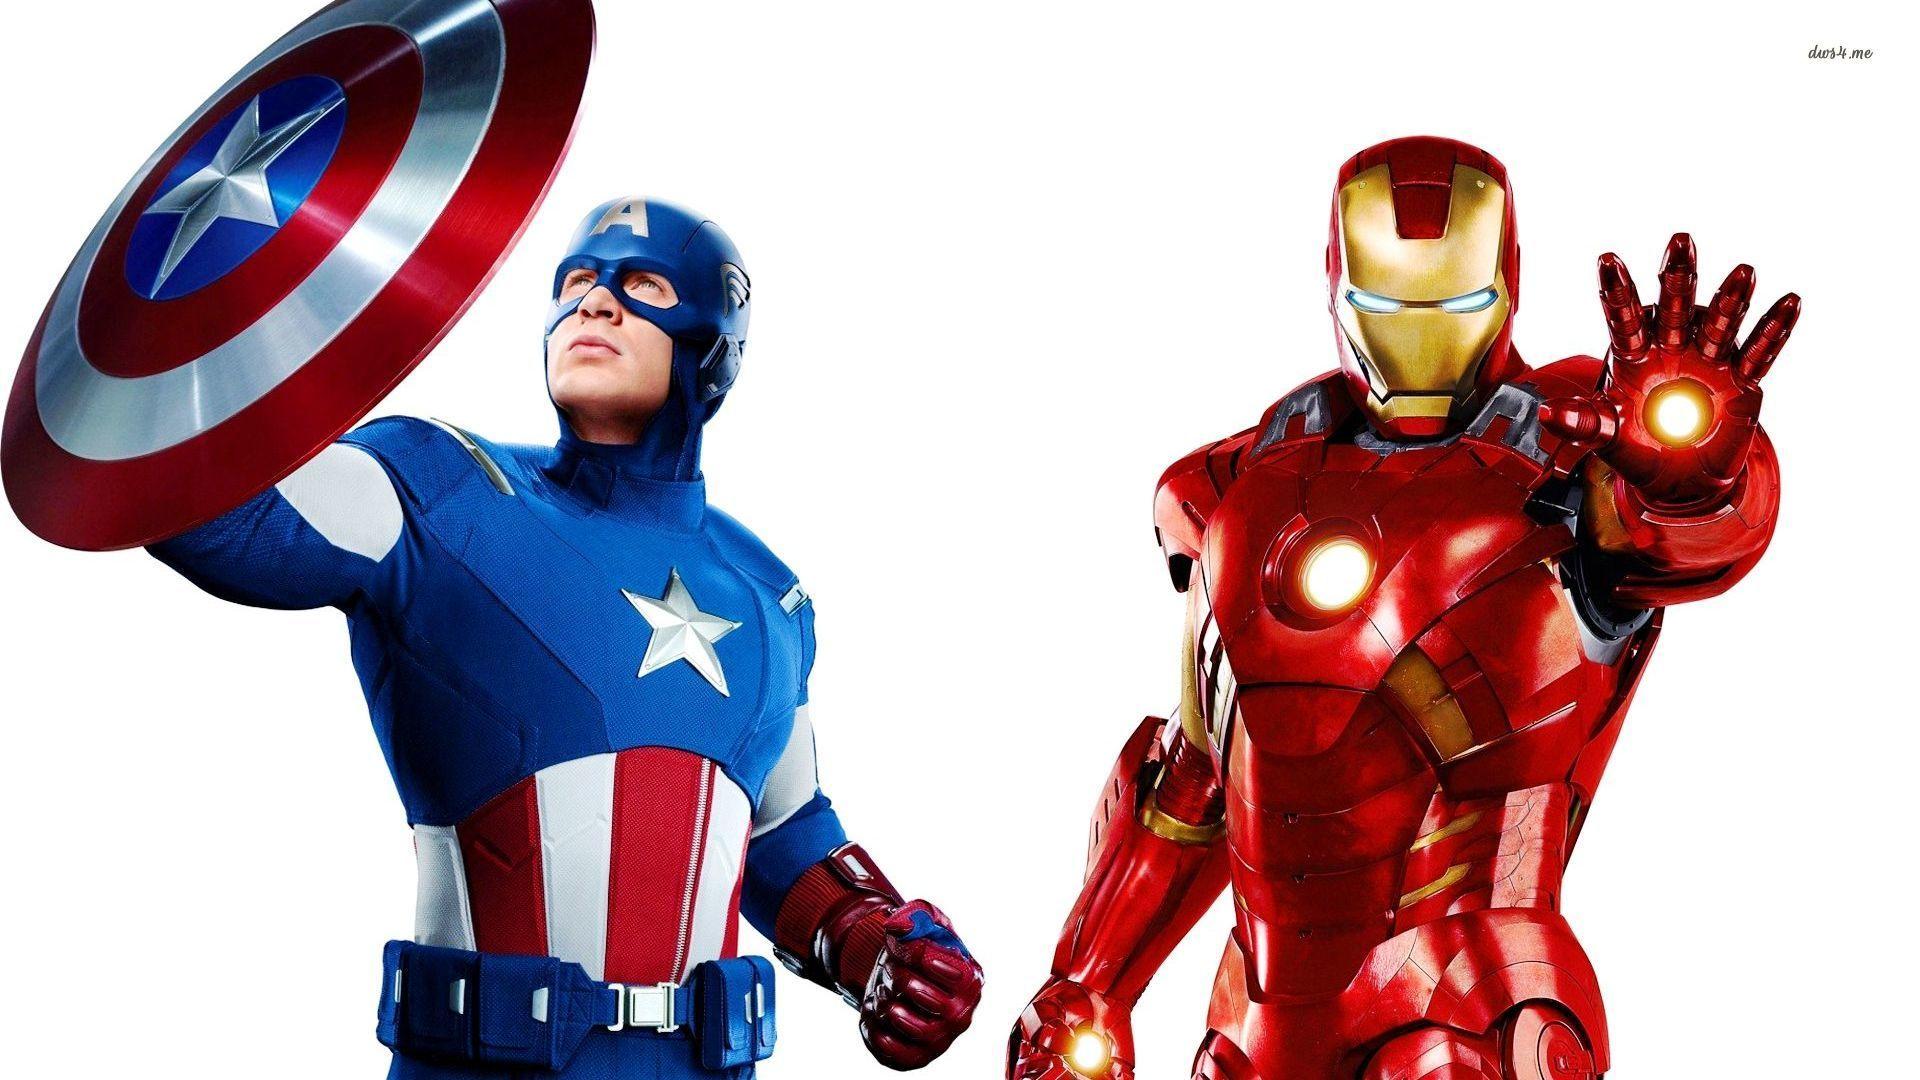 Captain America and Iron Man Avengers wallpaper